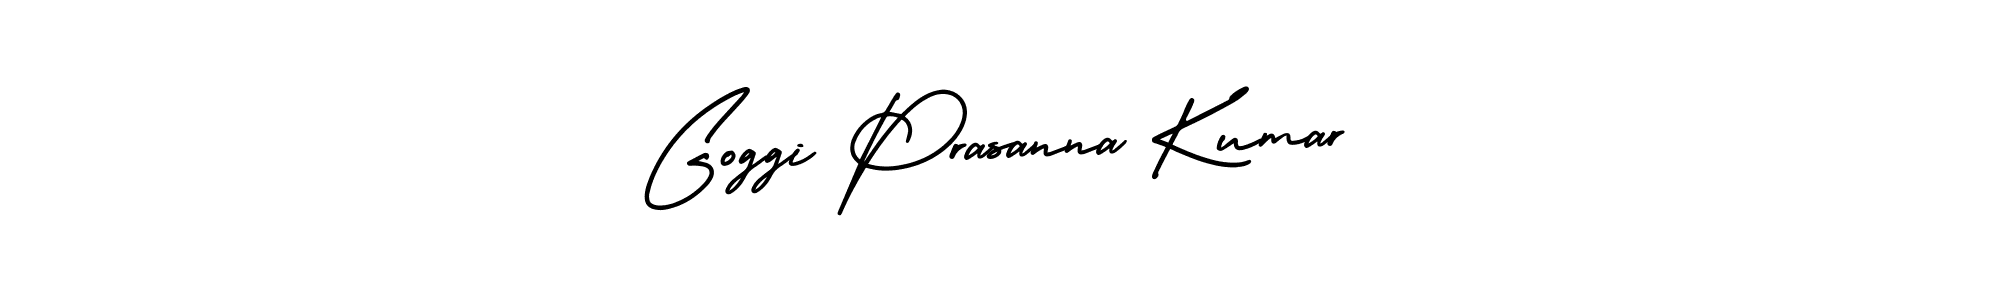 How to Draw Goggi Prasanna Kumar signature style? AmerikaSignatureDemo-Regular is a latest design signature styles for name Goggi Prasanna Kumar. Goggi Prasanna Kumar signature style 3 images and pictures png